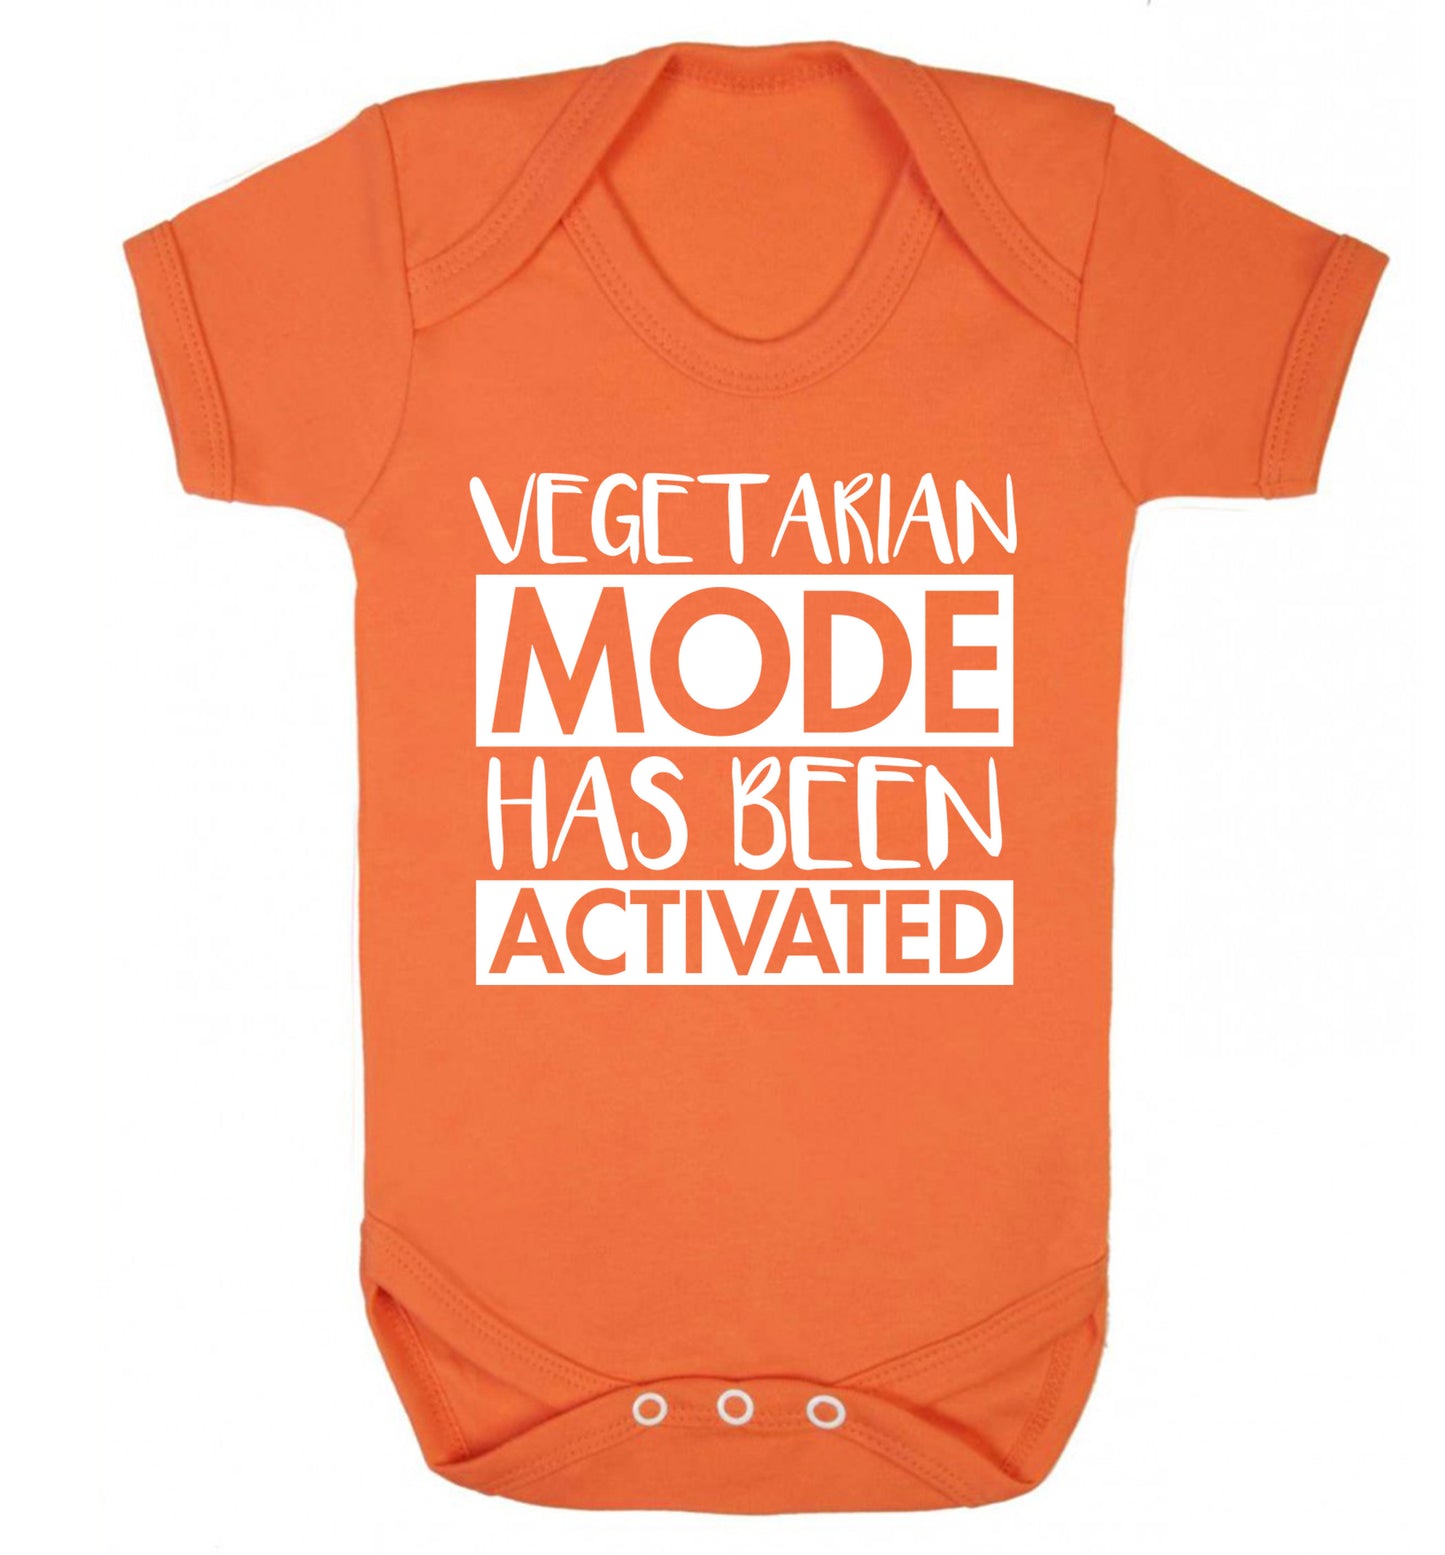 Vegetarian mode activated Baby Vest orange 18-24 months